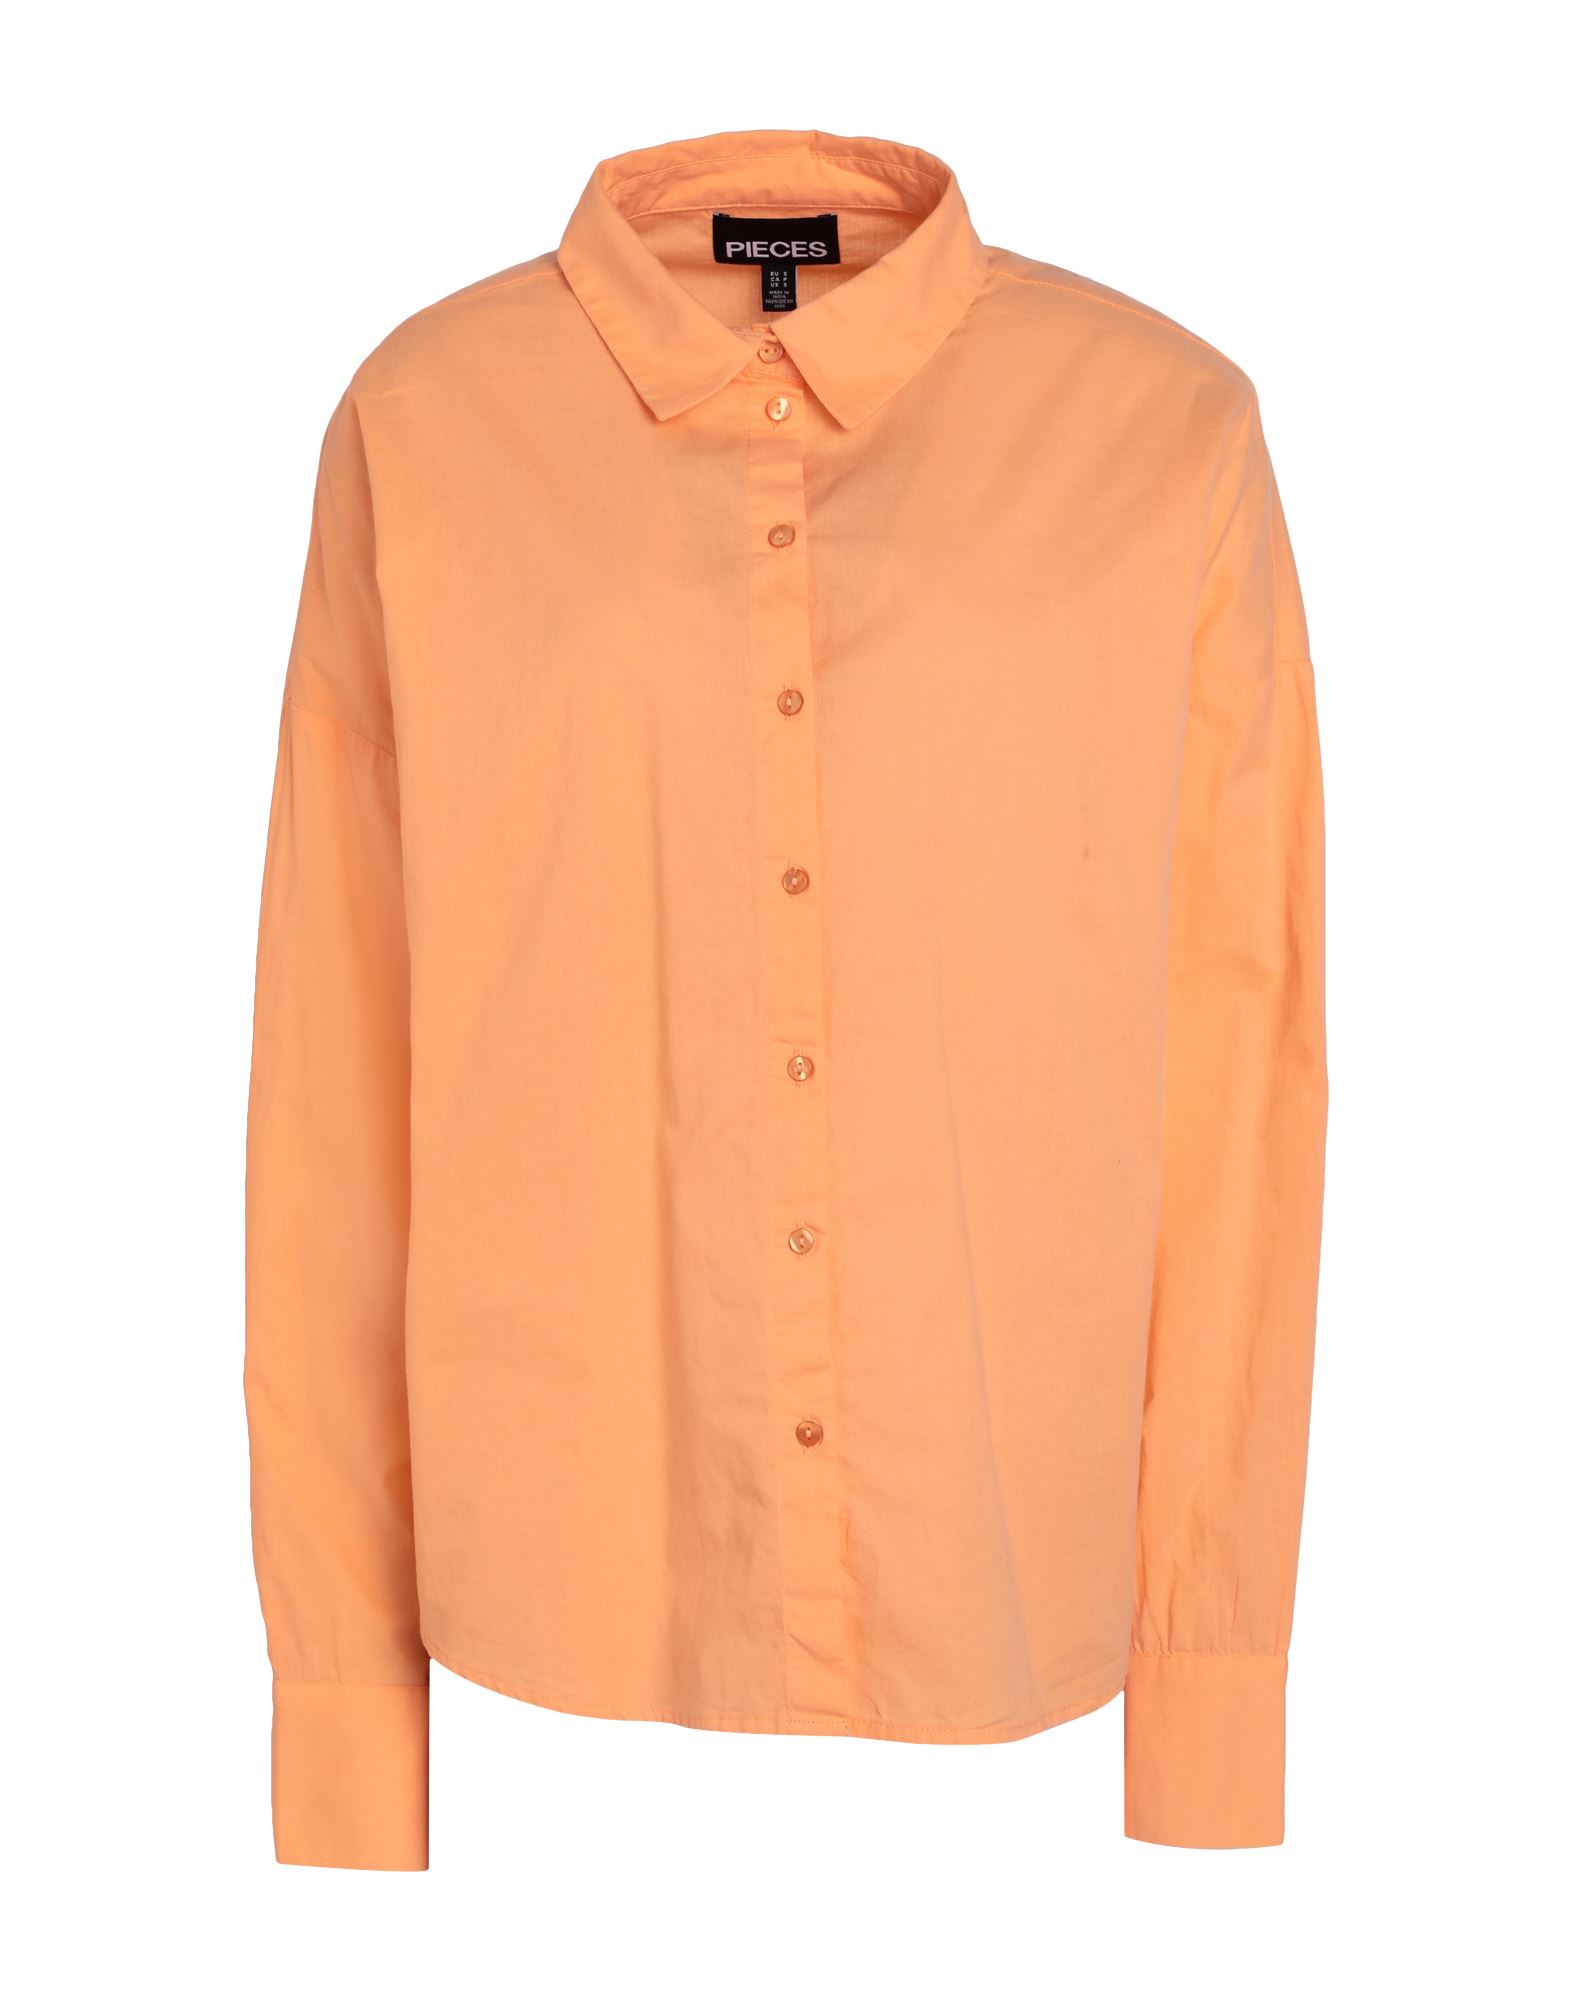 Pieces Shirts In Orange